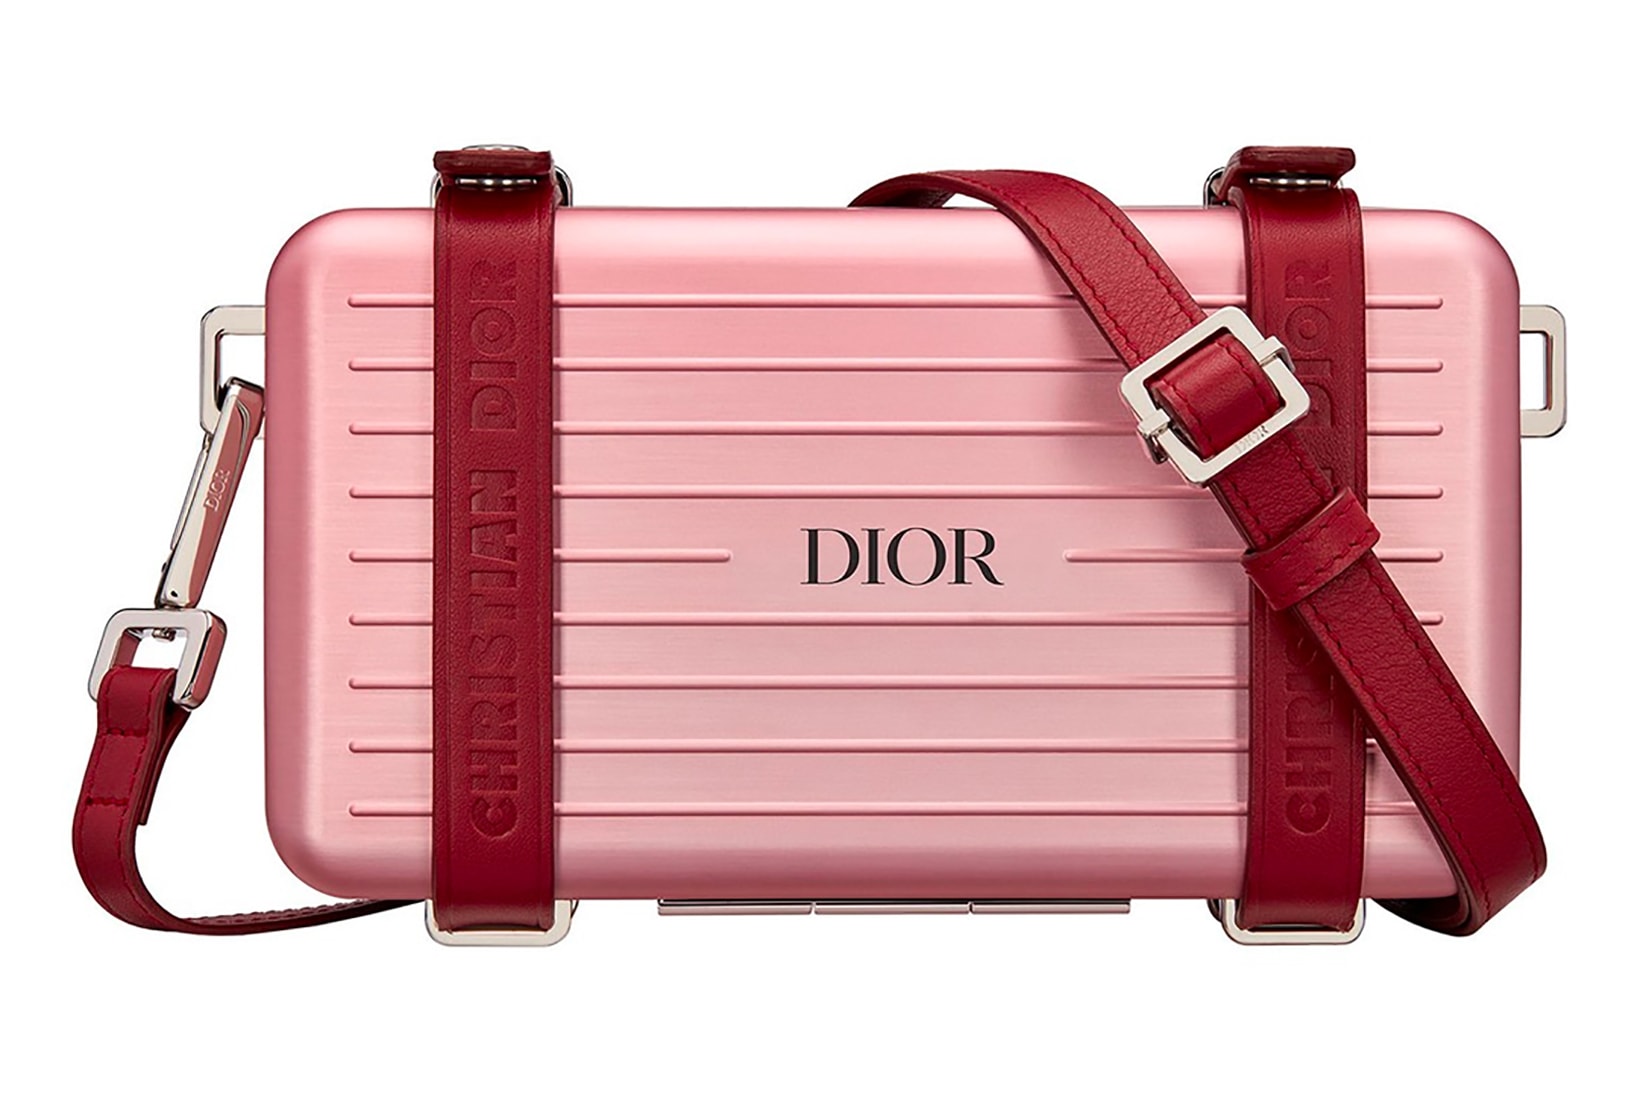 Dior x RIMOWA Personal Case Pink